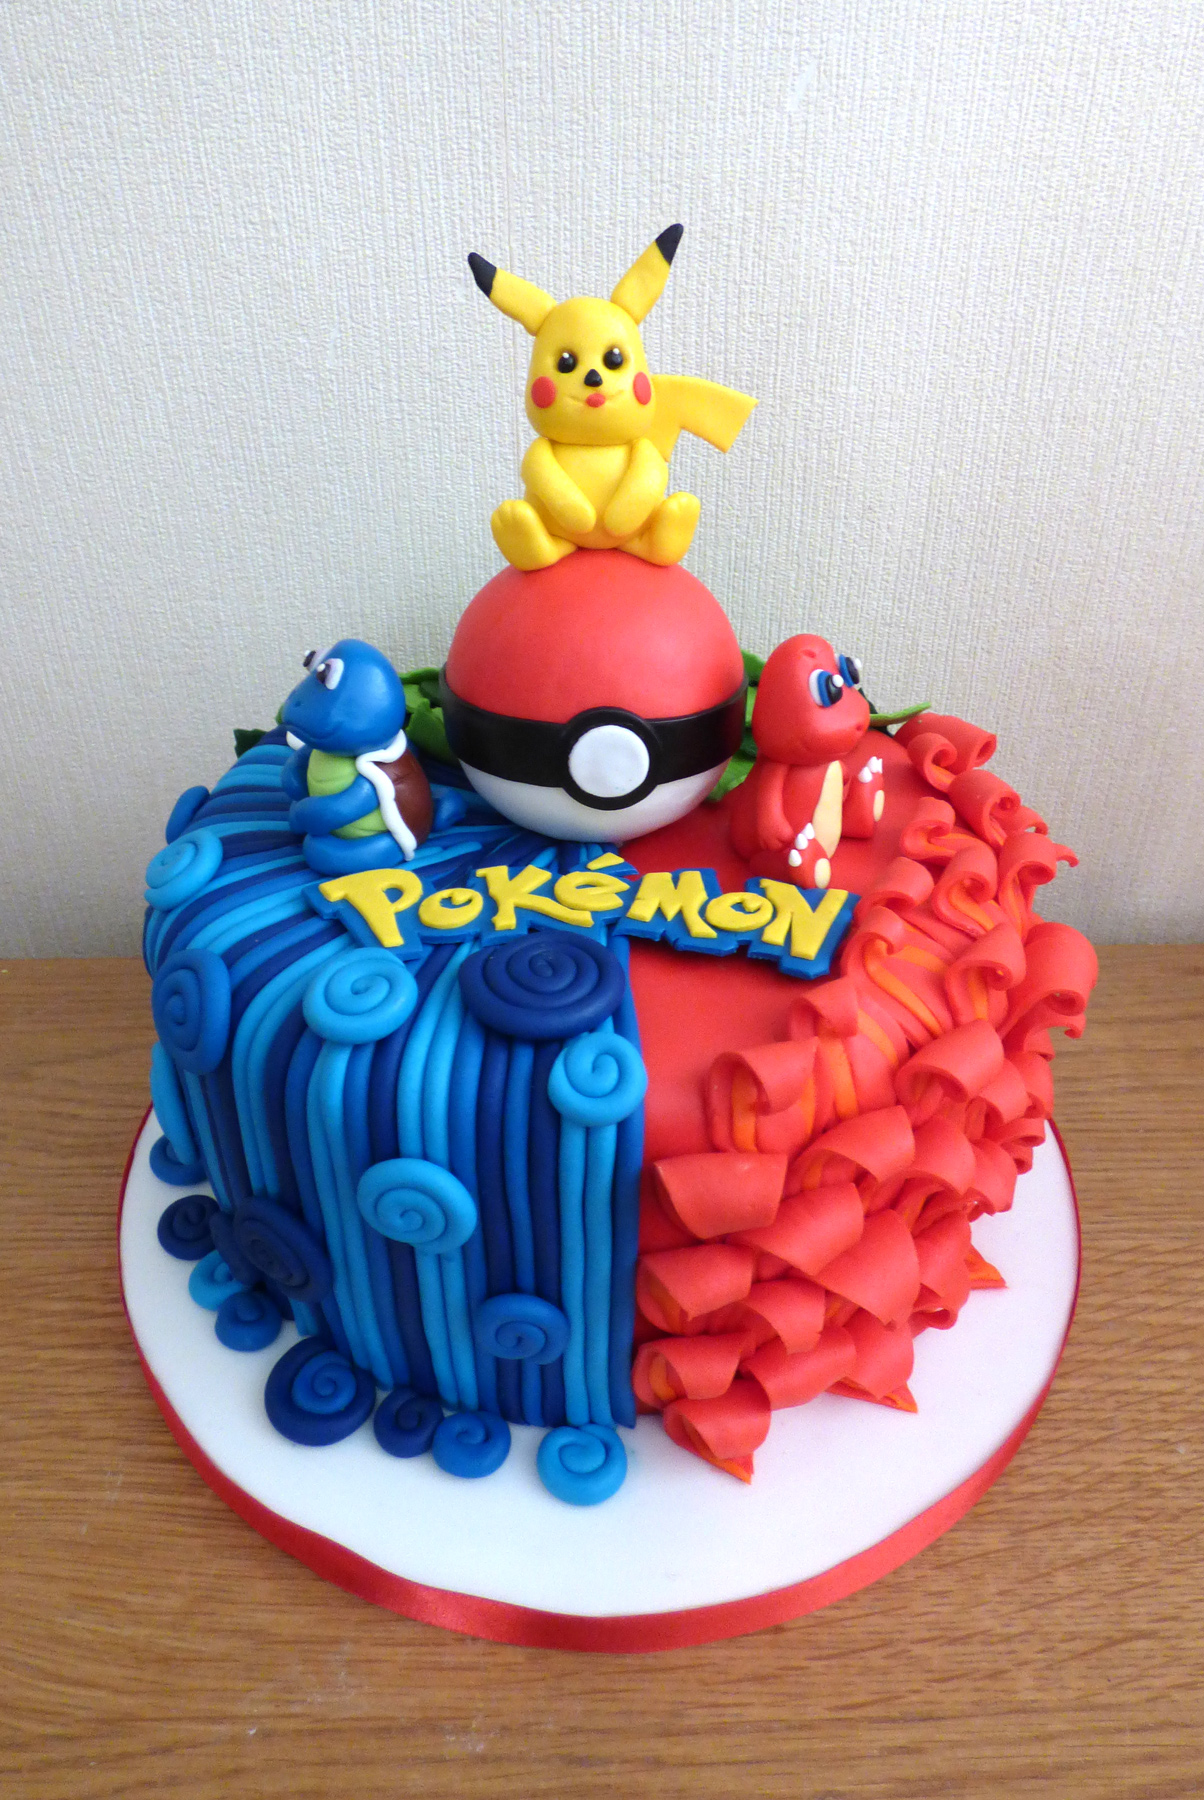 Share more than 66 pokemon battlefield cake latest - in.daotaonec